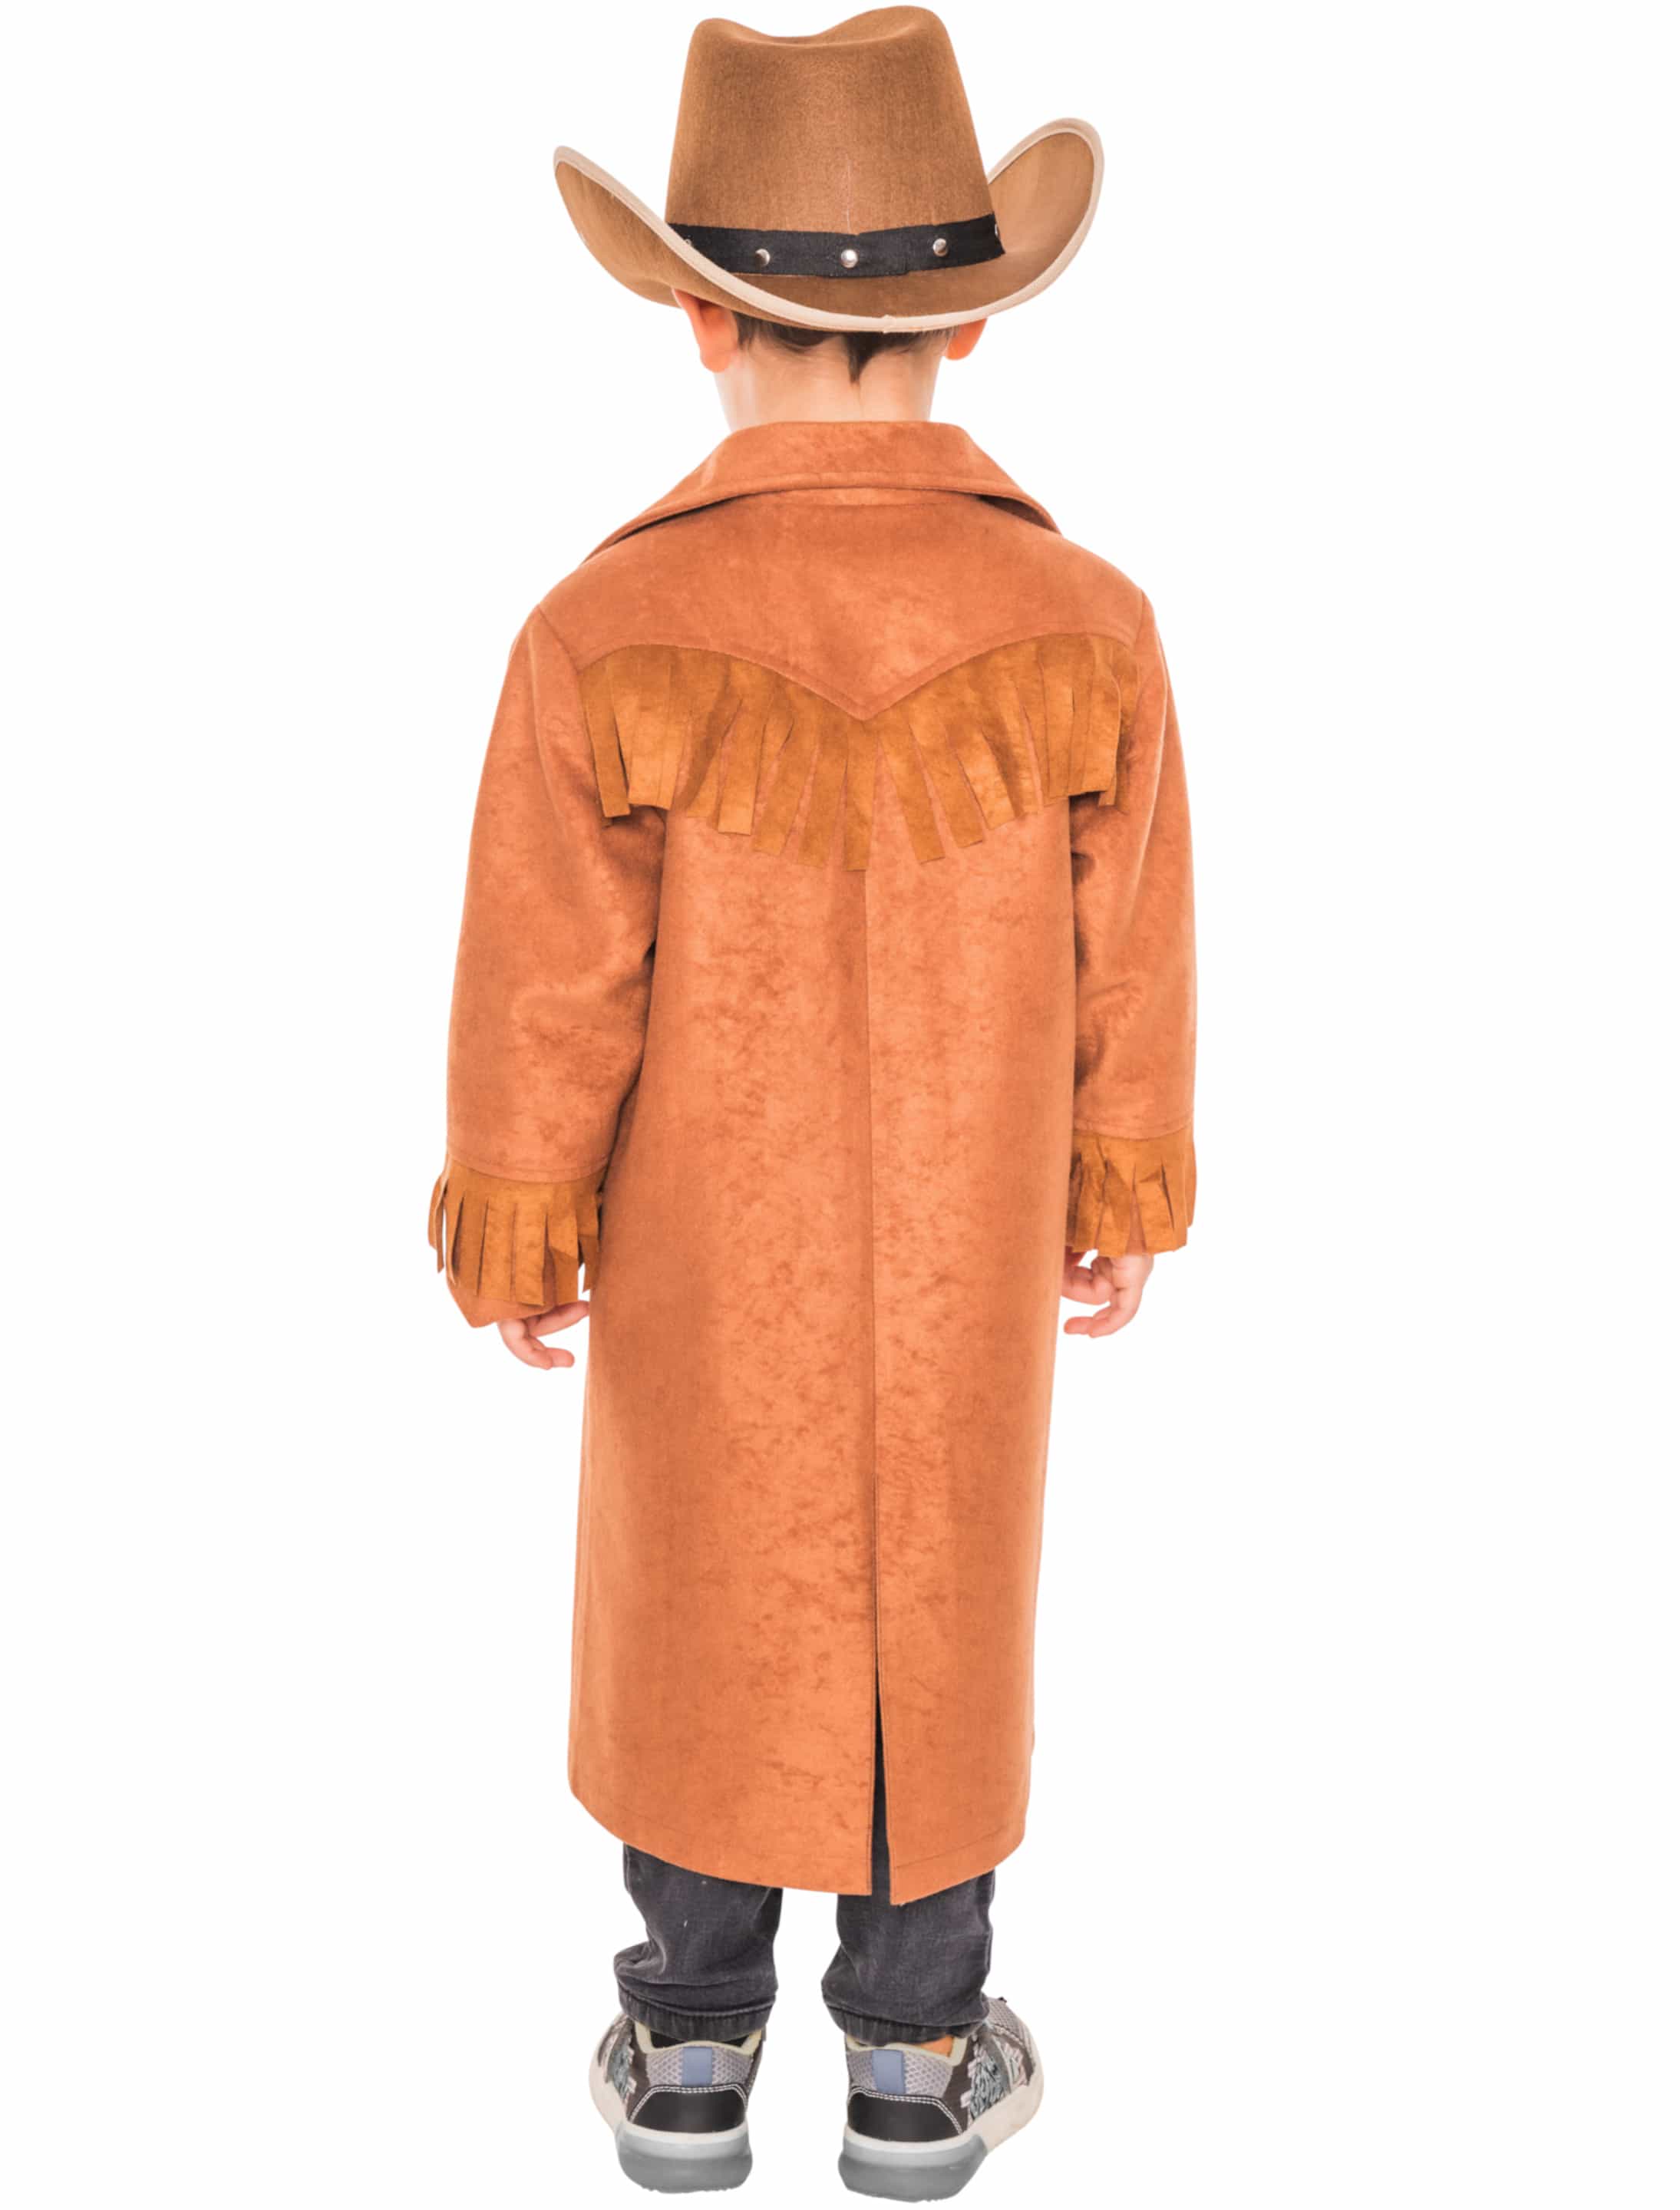 Mantel Cowboy Kinder braun 116-128